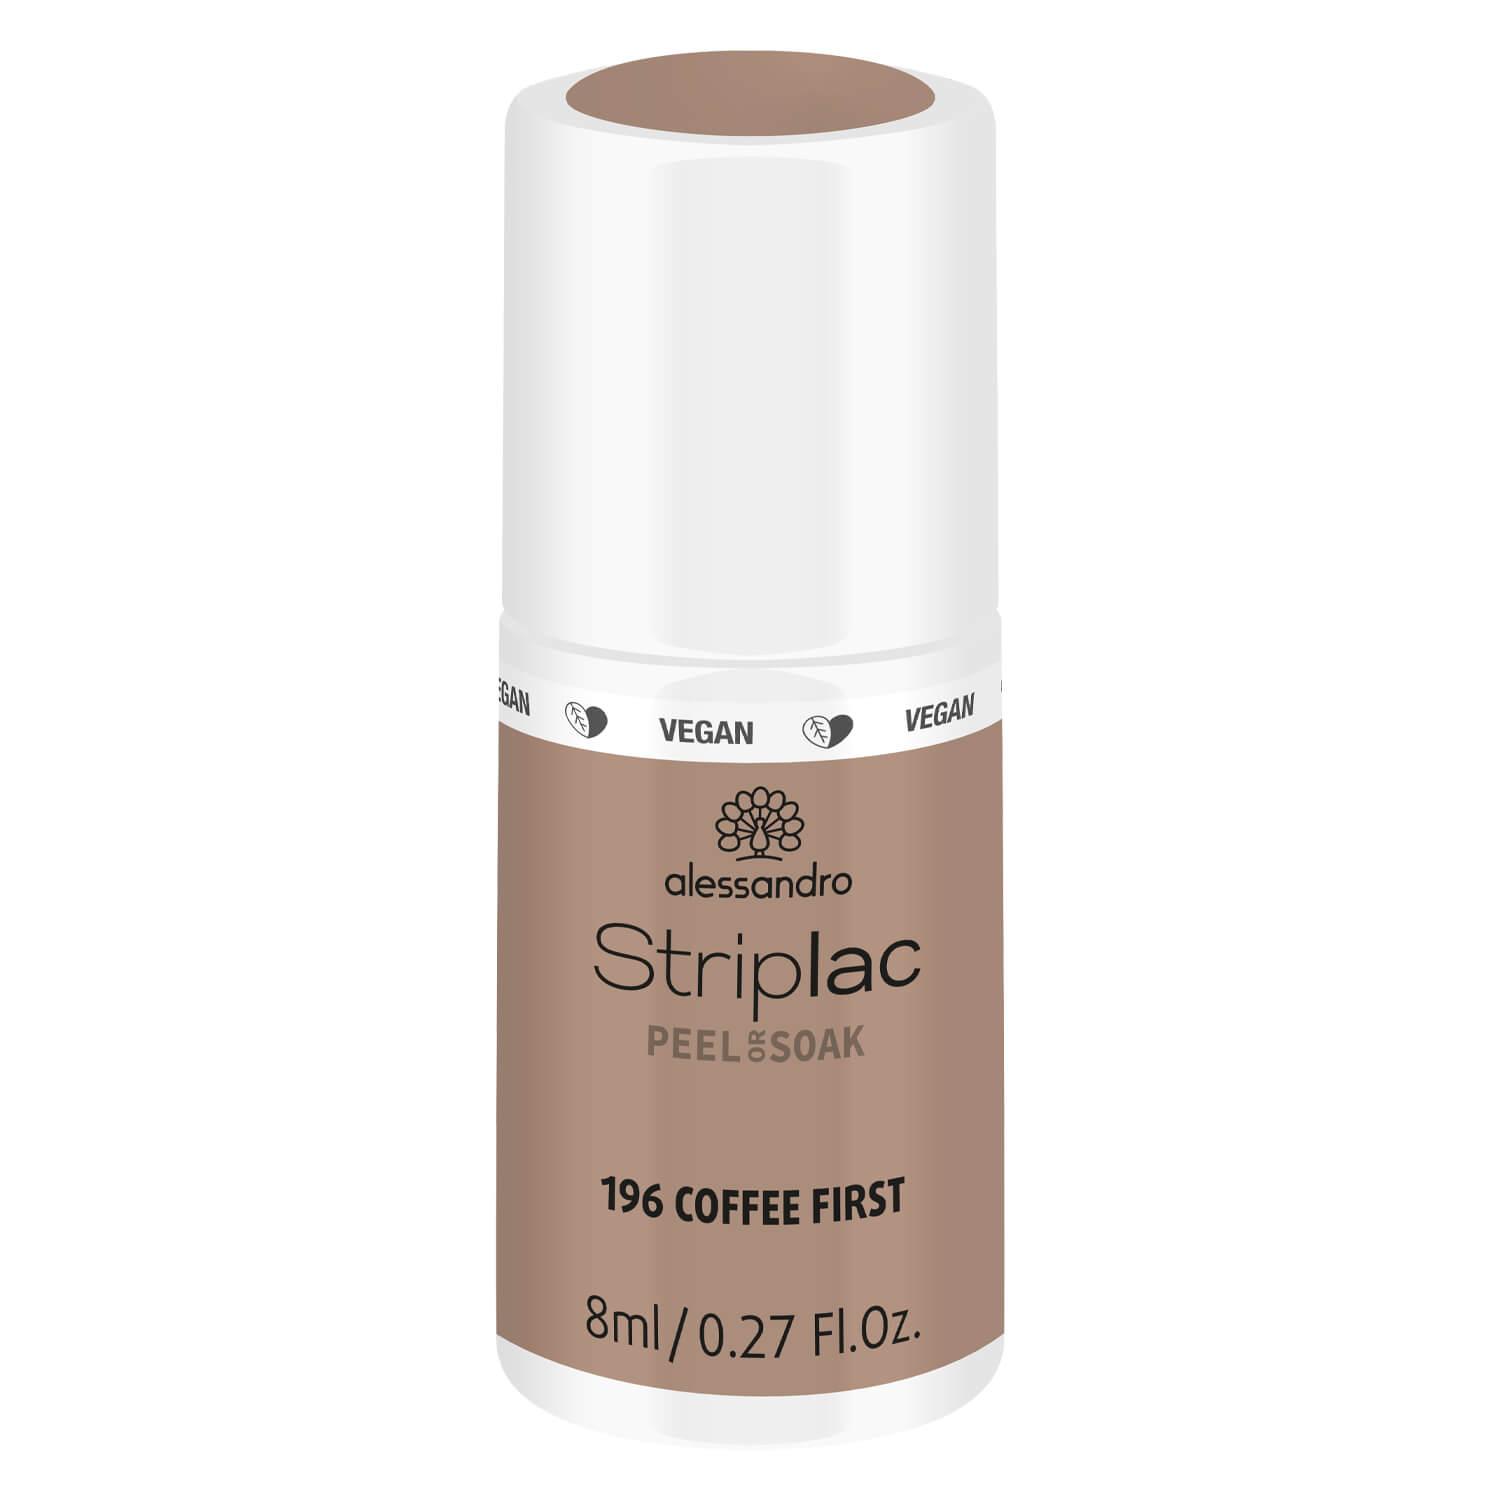 Striplac Peel or Soak - 196 Coffee First